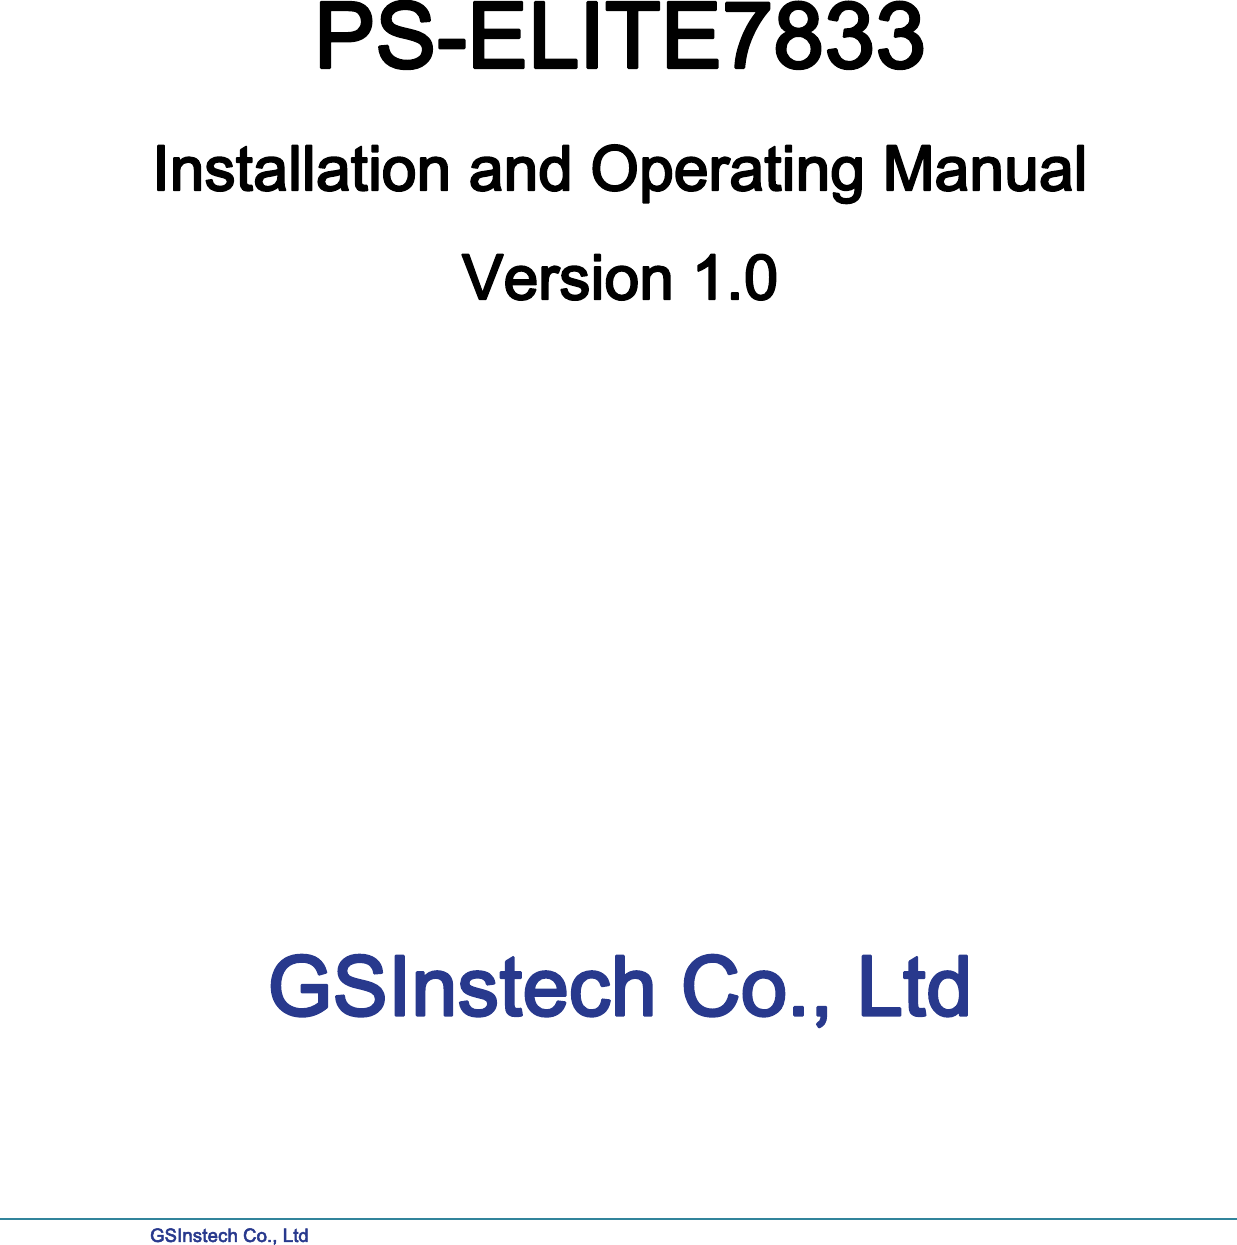 GSInstech Co., Ltd         PS-ELITE7833 Installation and Operating Manual Version 1.0                 GSInstech Co., Ltd    